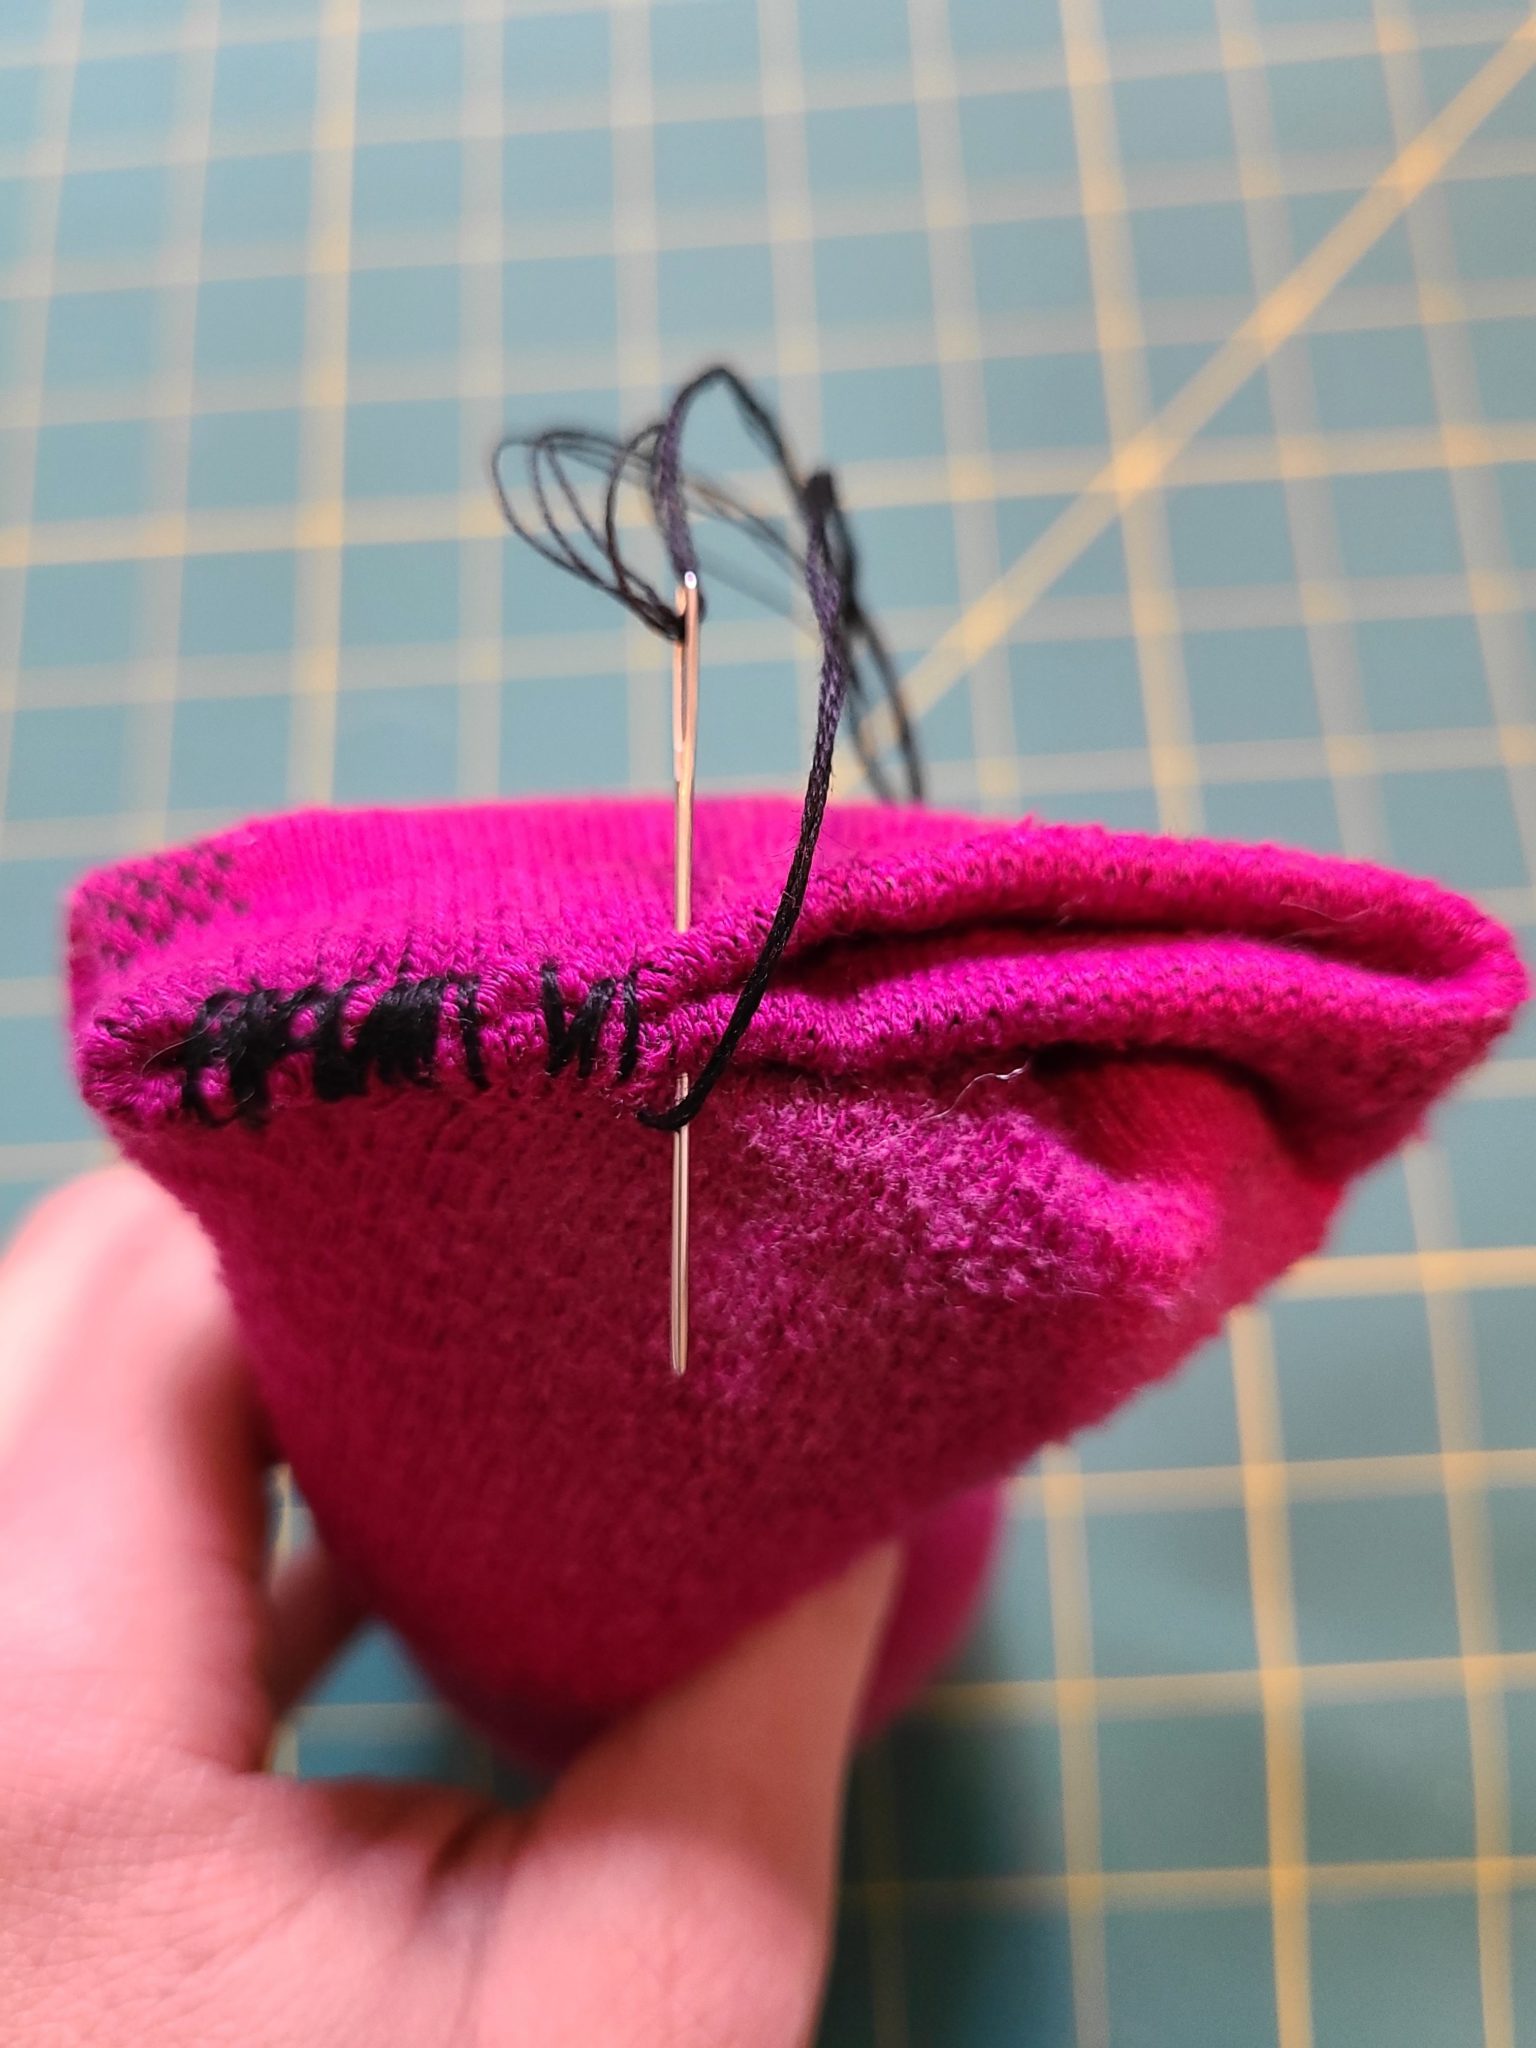 Sewing sock closed.